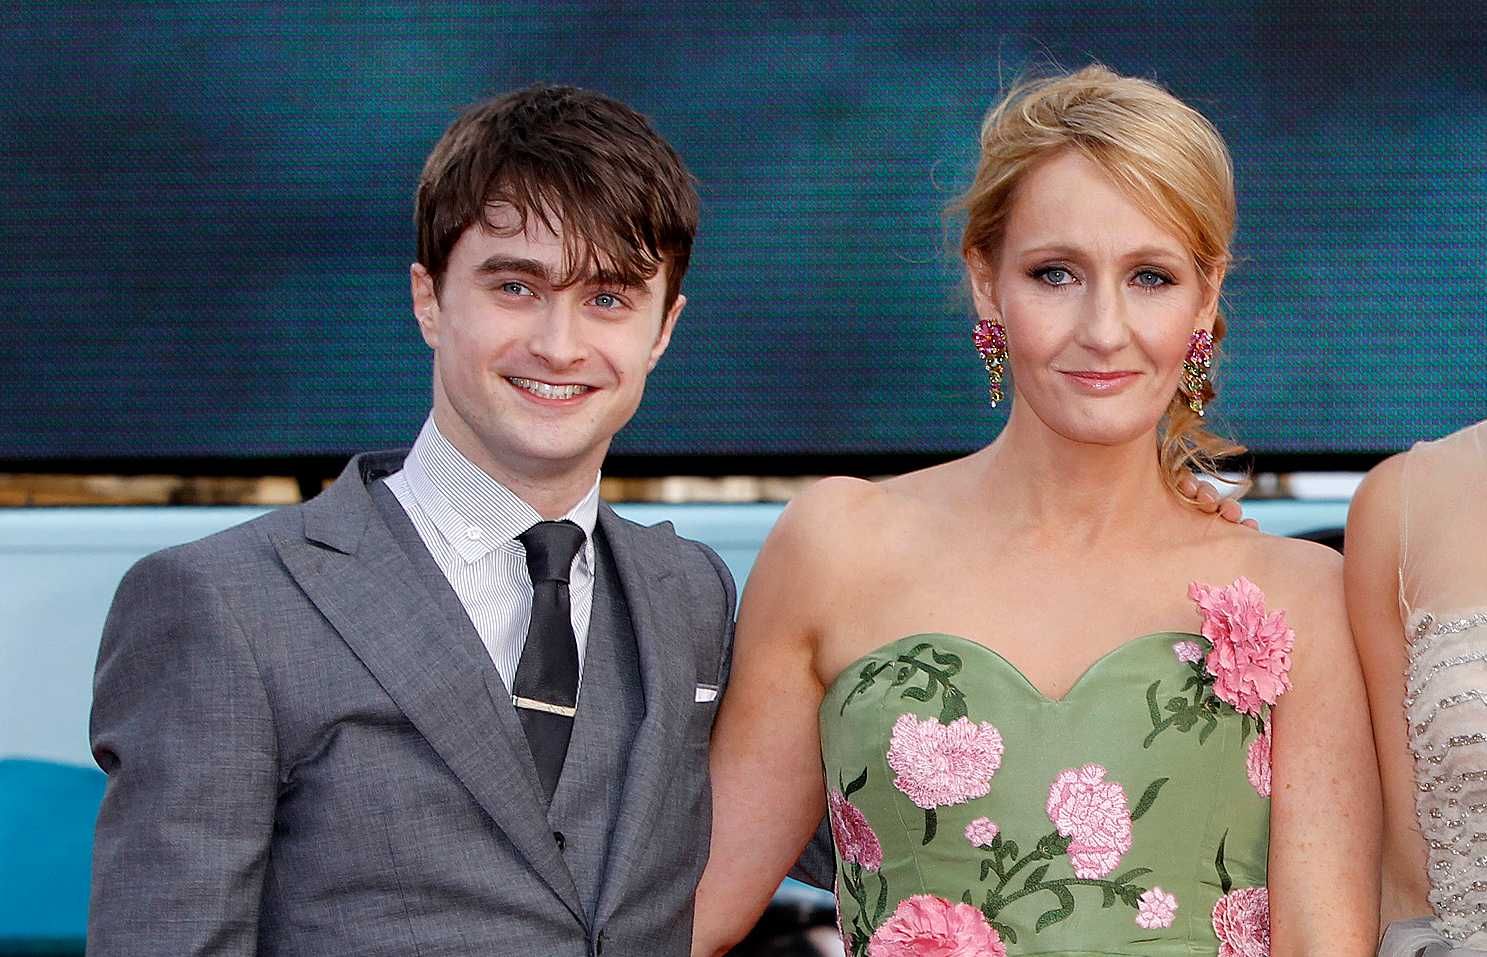 Daniel Radcliffe and J.K. Rowling (Source: NBC)